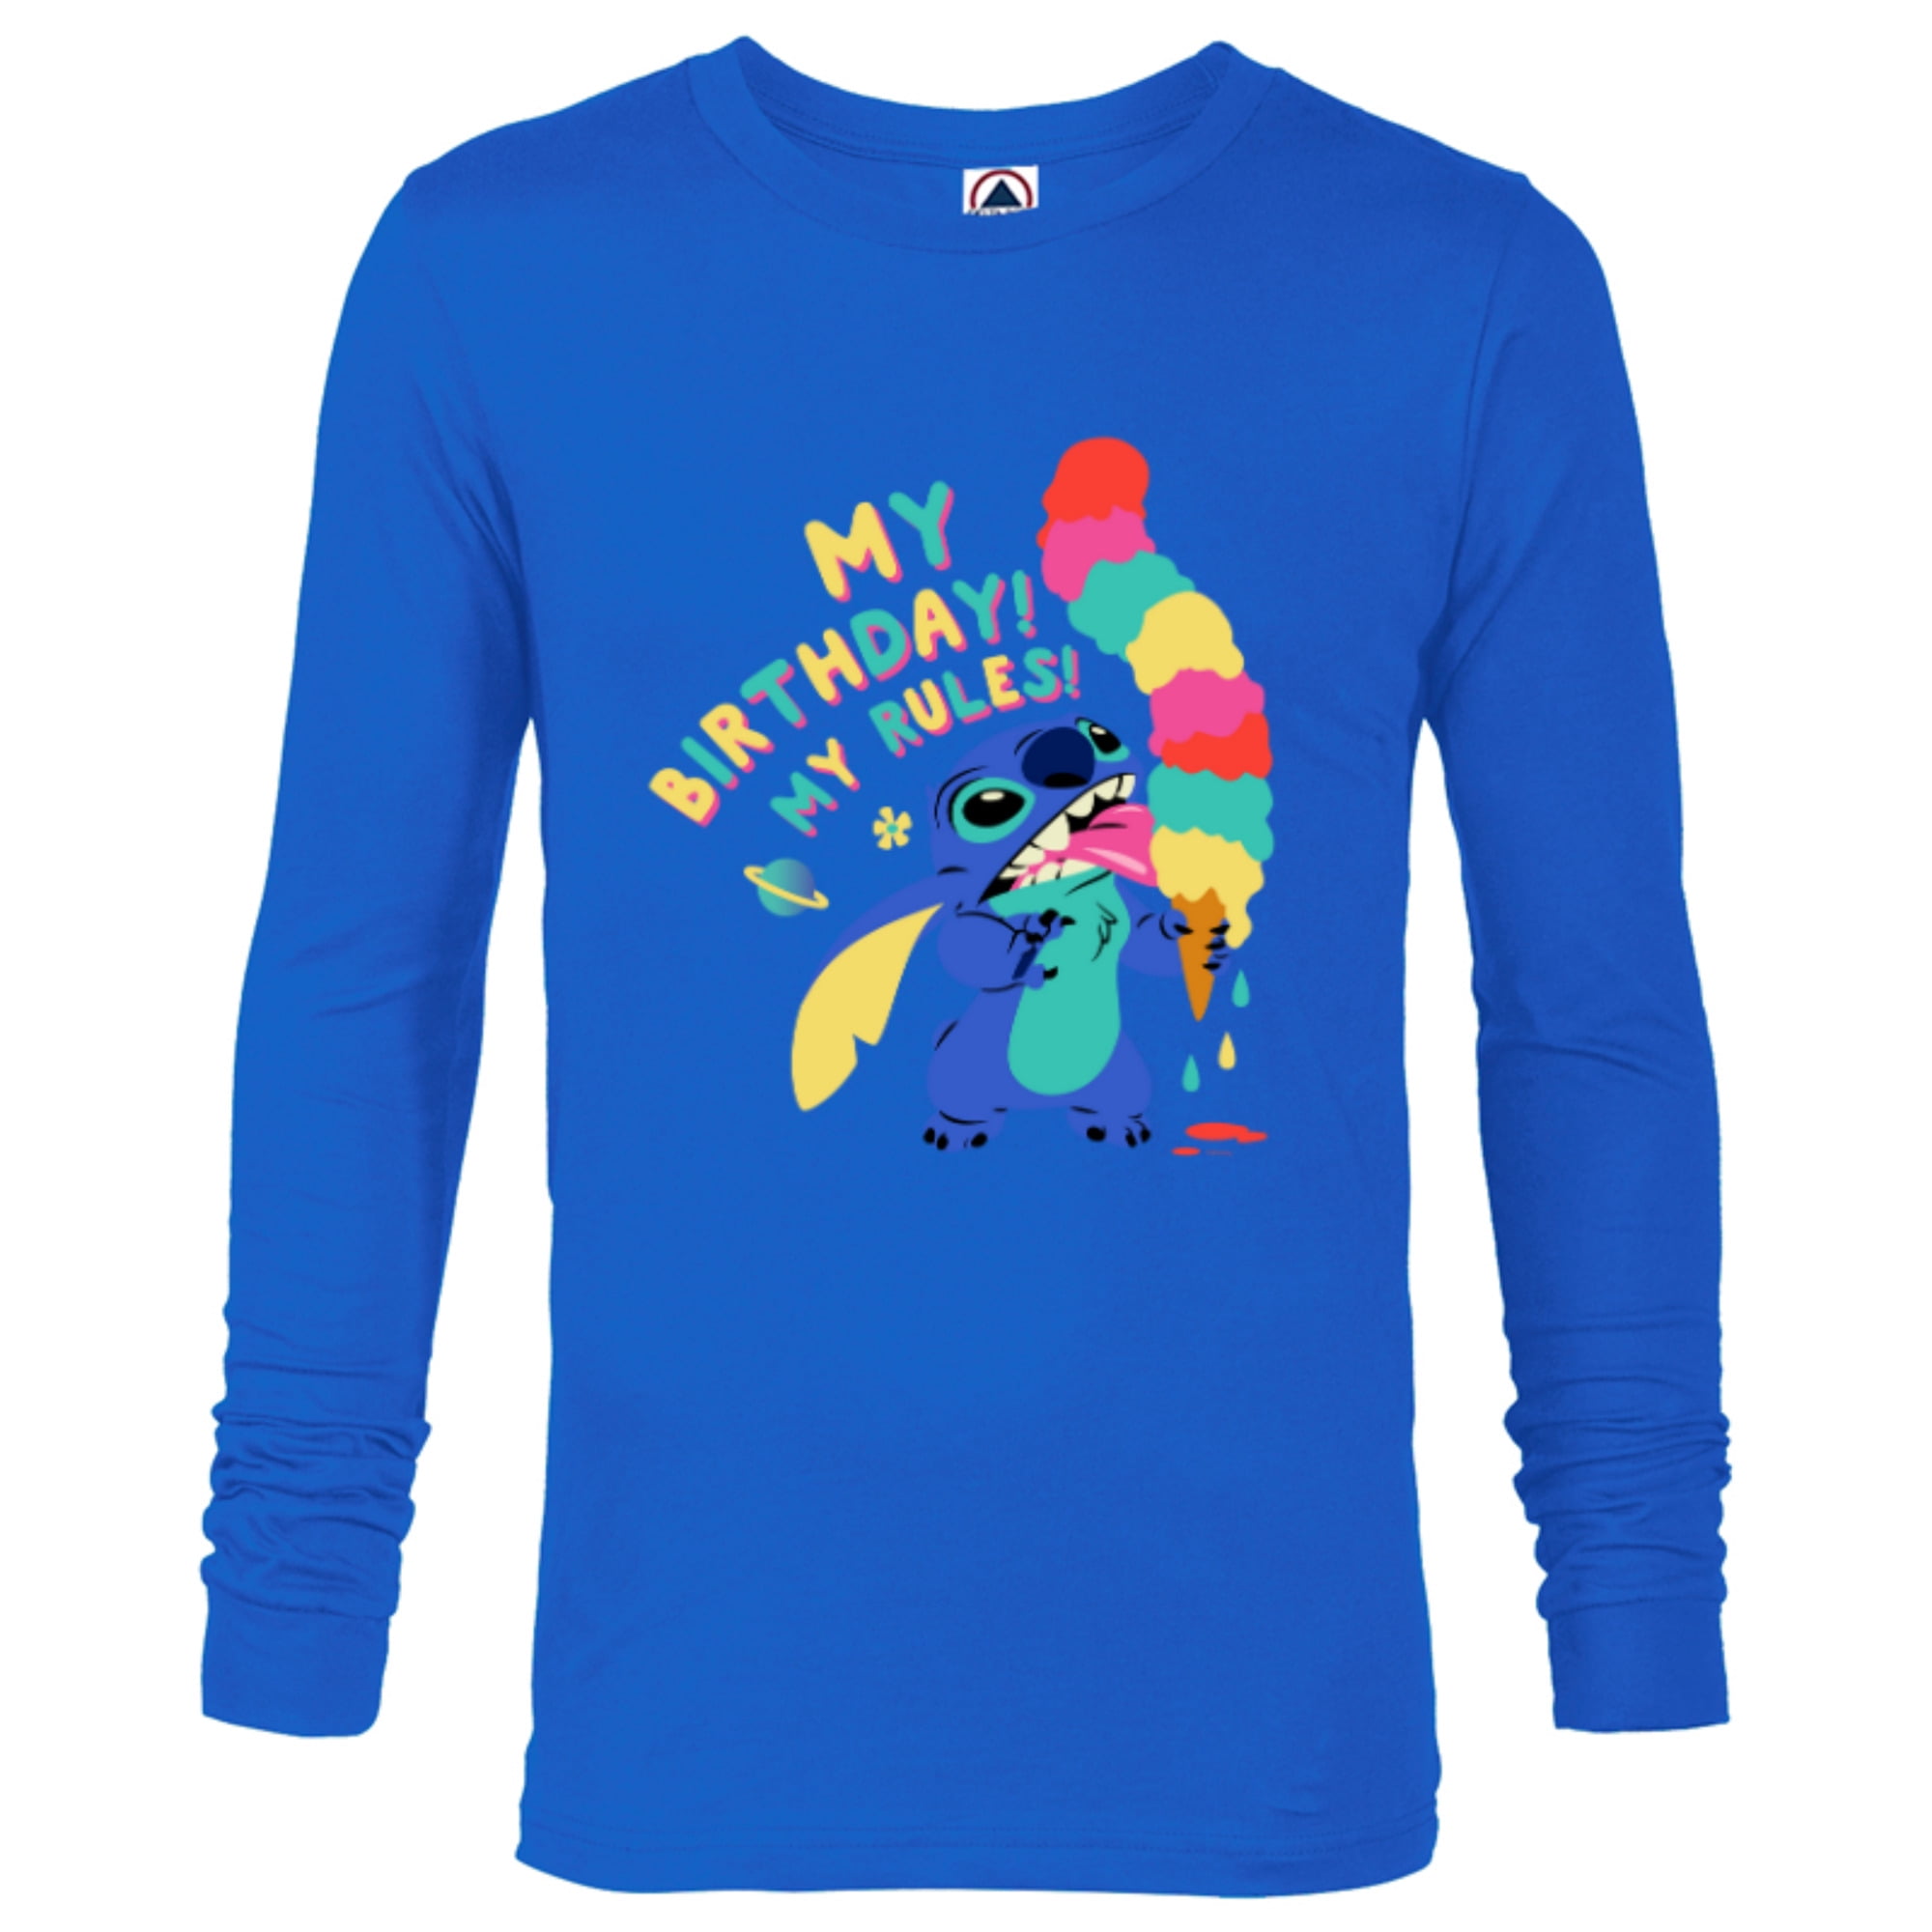 Bluey Dance Mode Bluey Birthday Shirt - Ink In Action